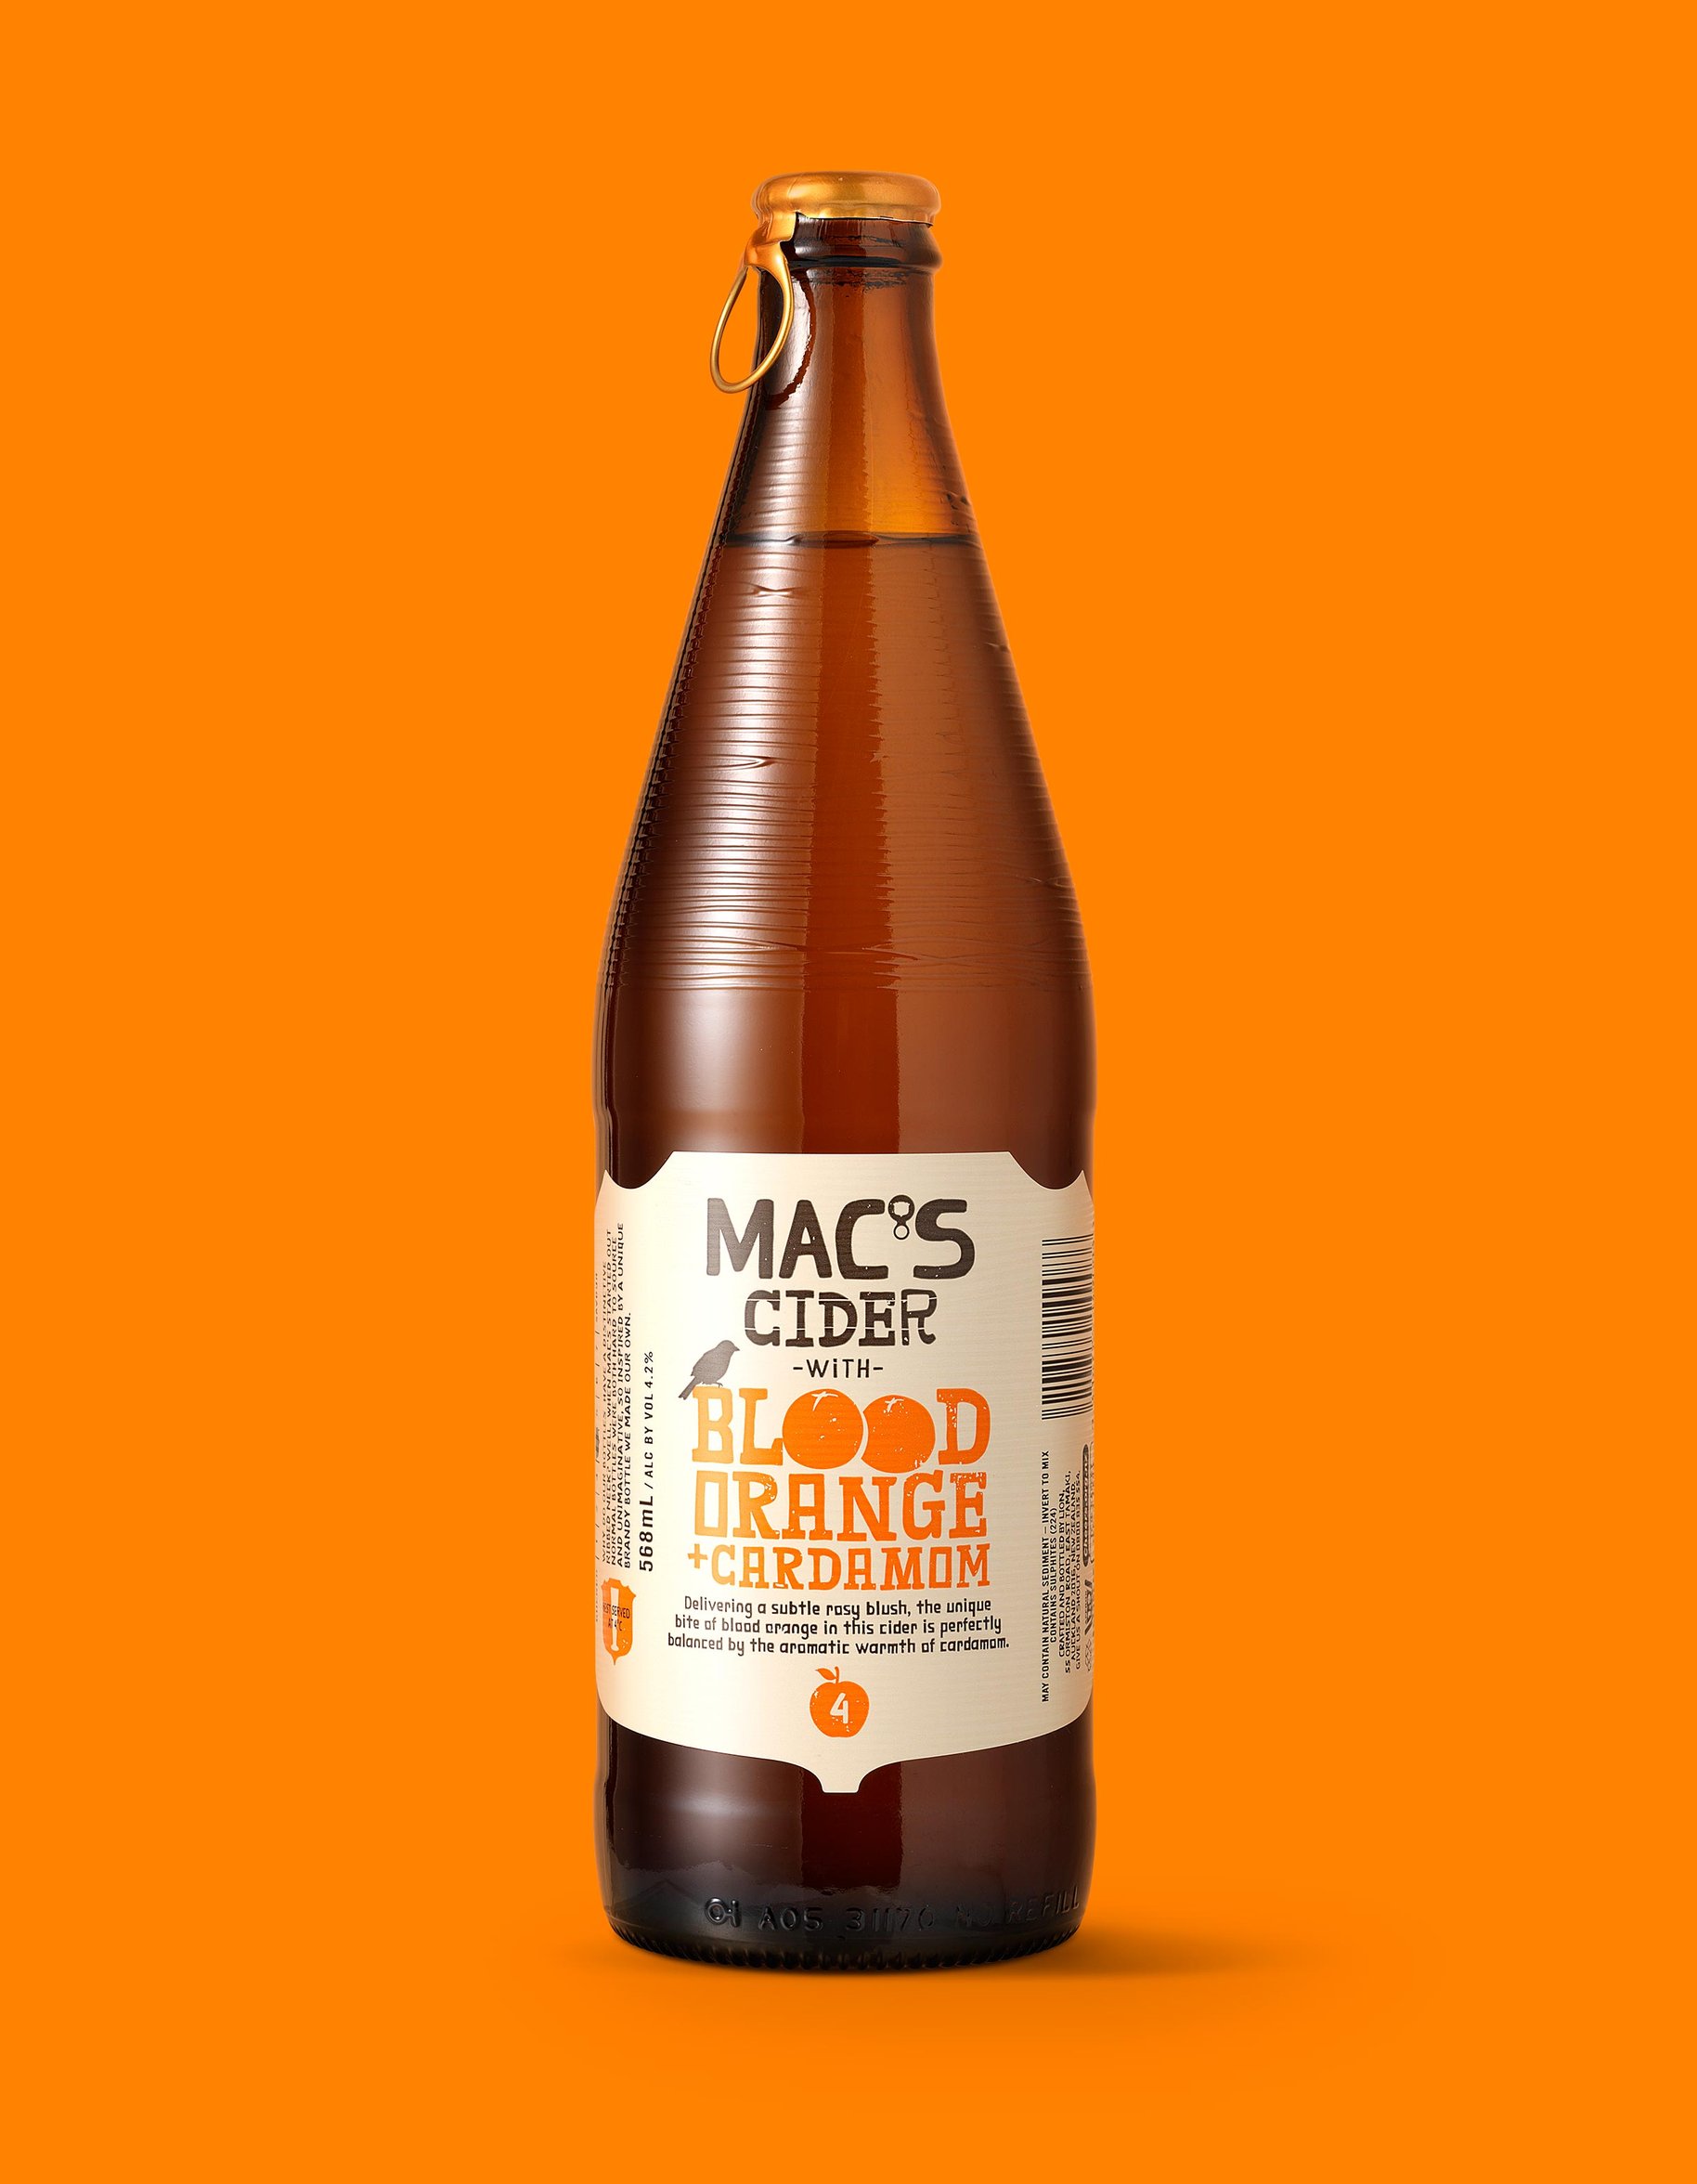 Macs Beer blood orange cider packaging